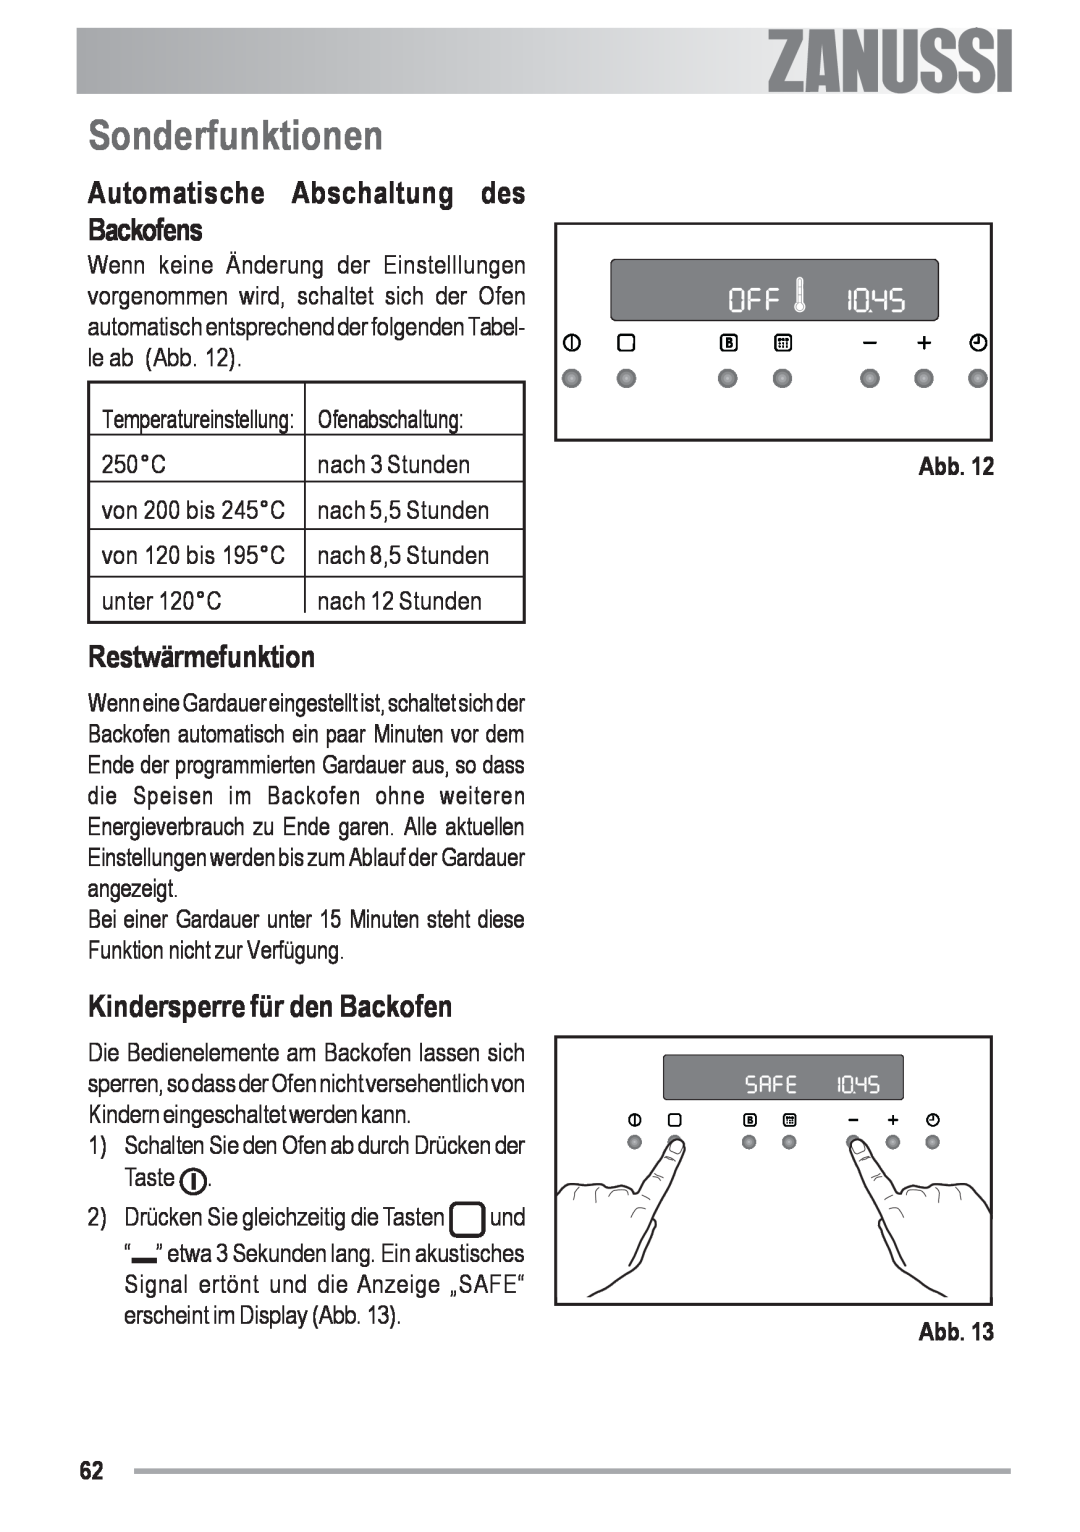 Zanussi ZYB 591 XL manual Sonderfunktionen, Automatische Abschaltung des Backofens, Restwärmefunktion, electrolux, Abb Abb 